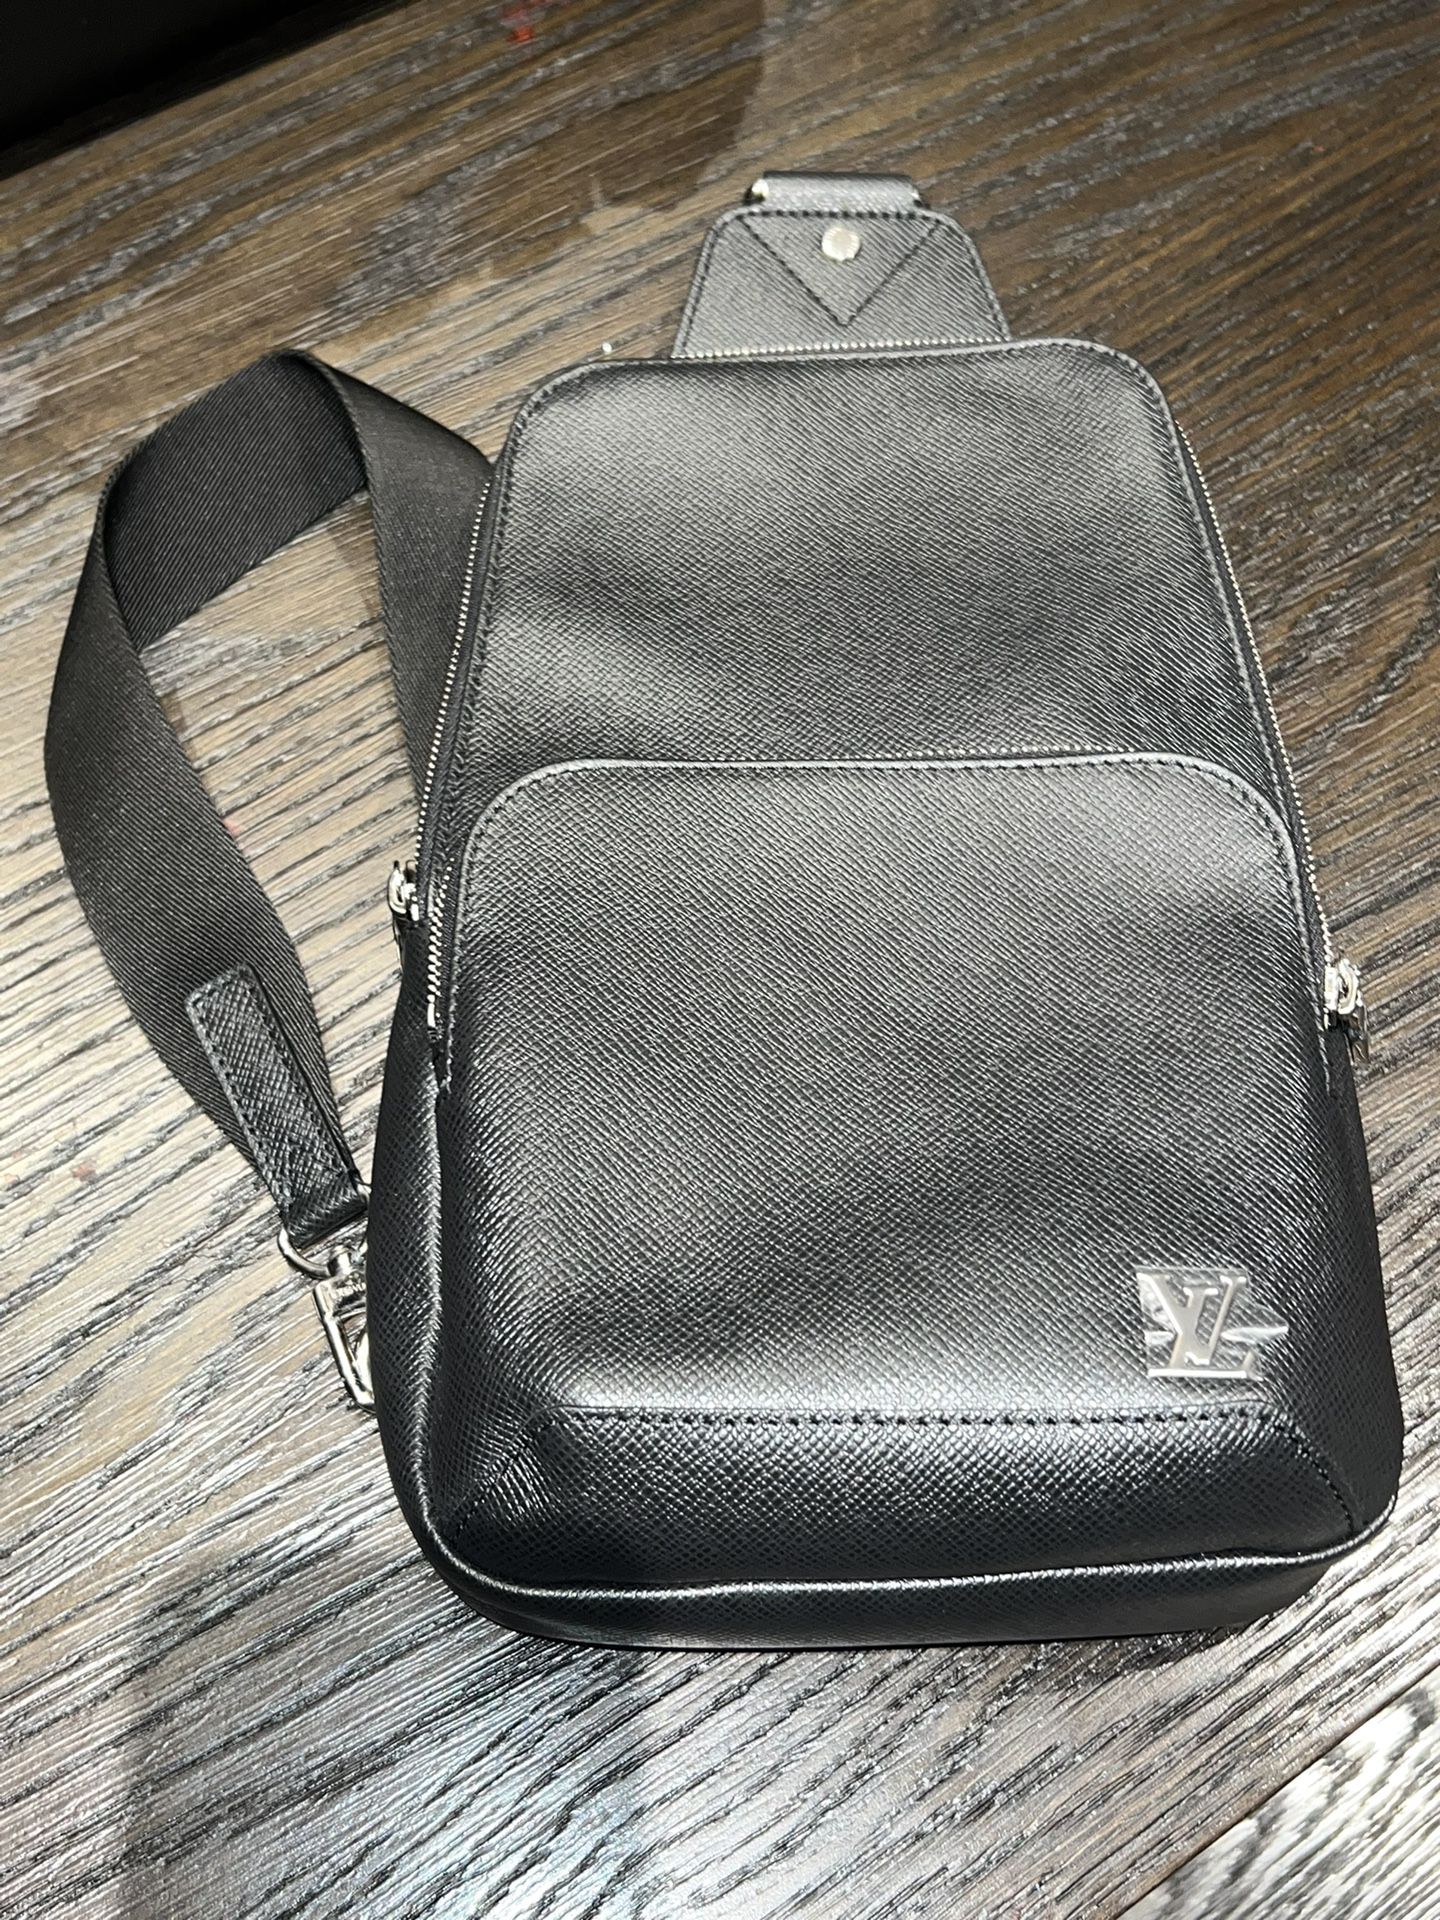 Never Worn Louis Vuitton Avenue sling bag